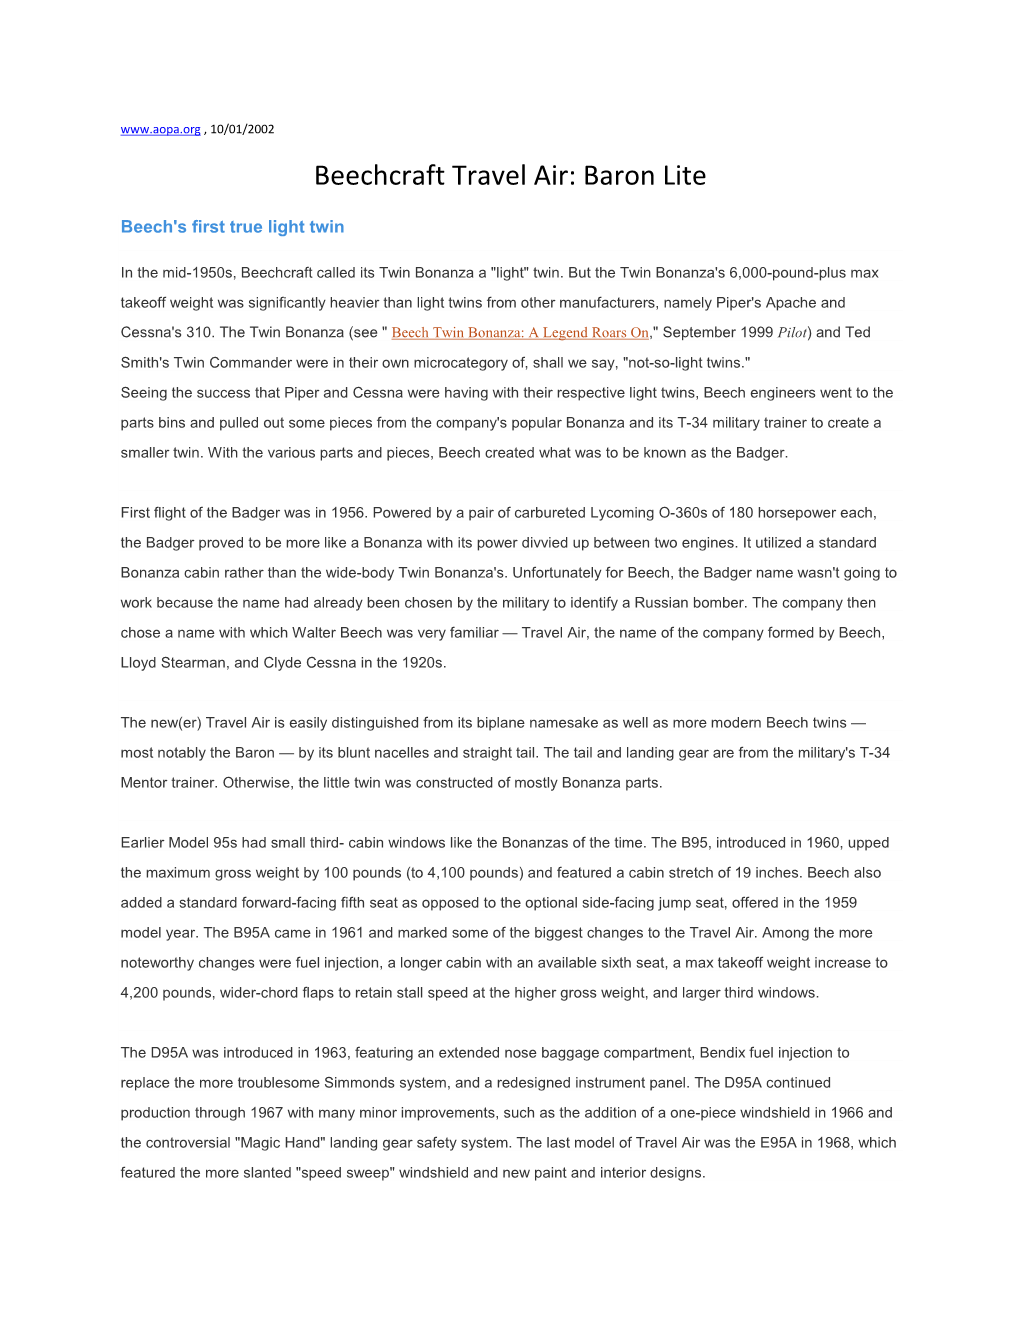 Beechcraft Travel Air: Baron Lite